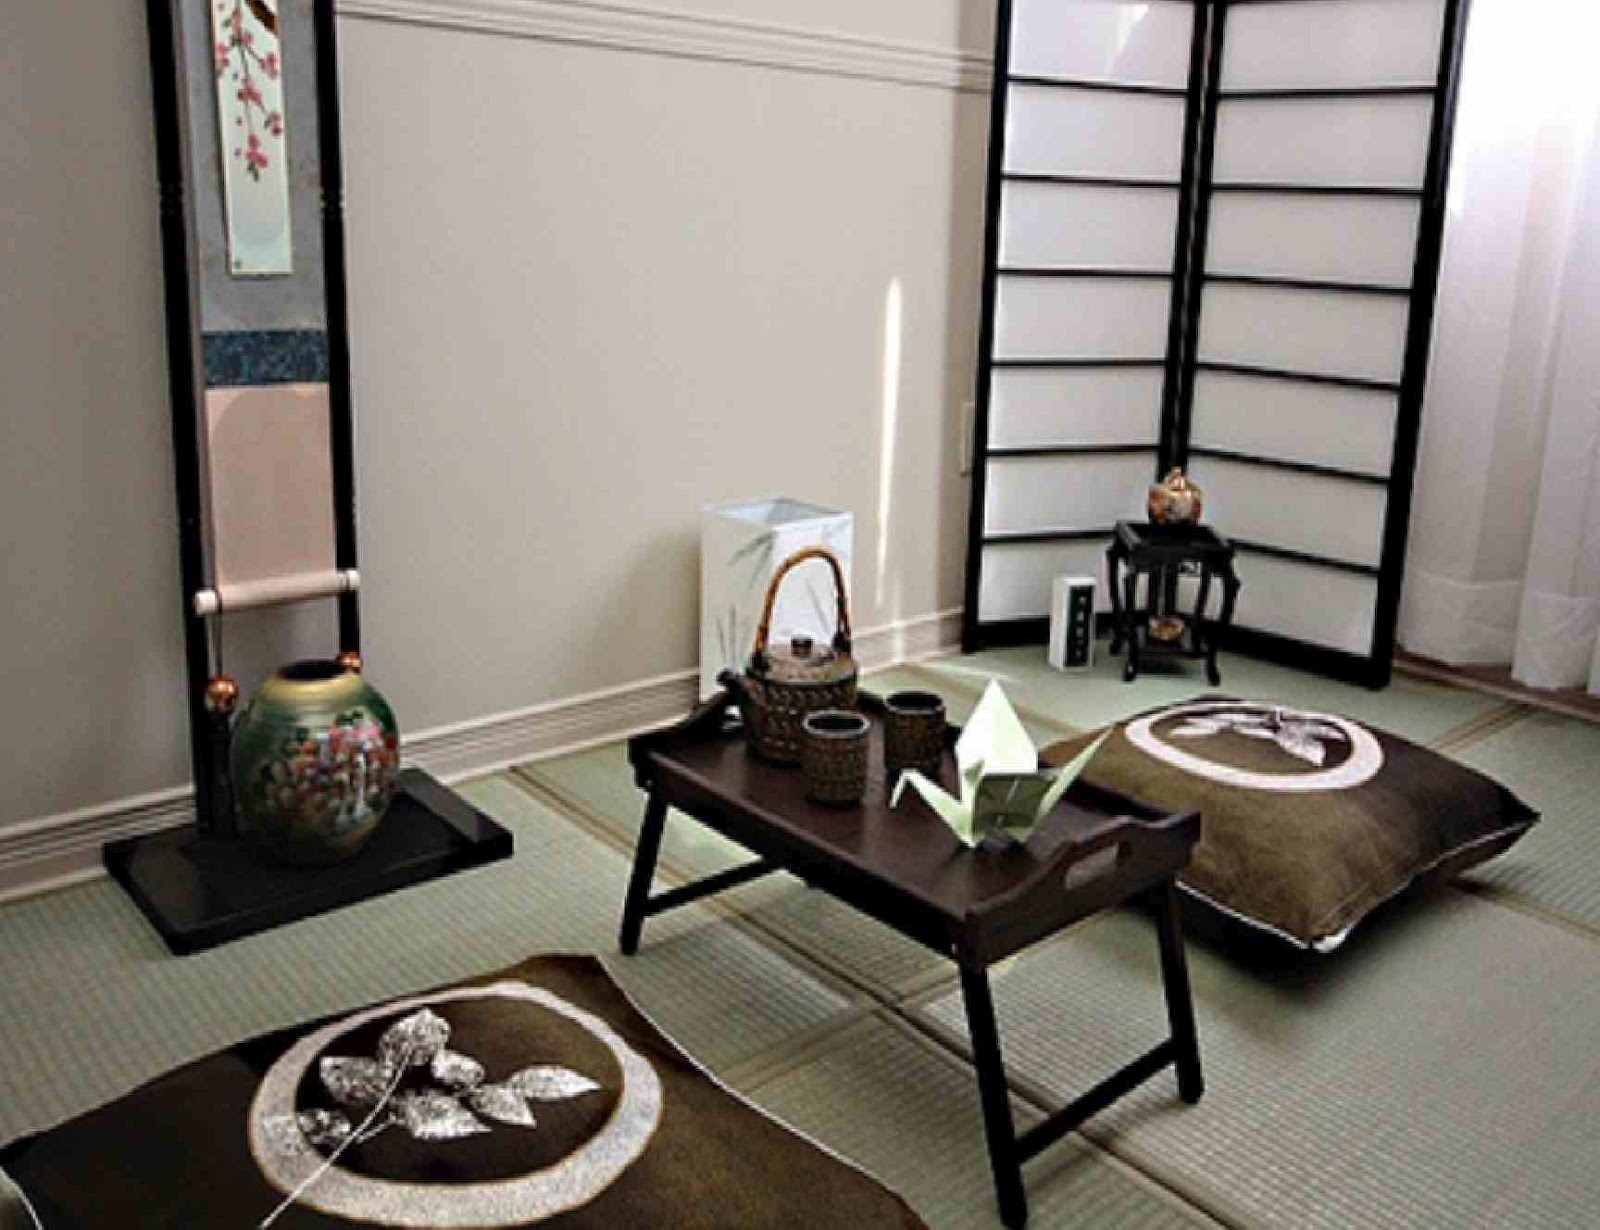  Japanese  Interior Design Interior Home  Design